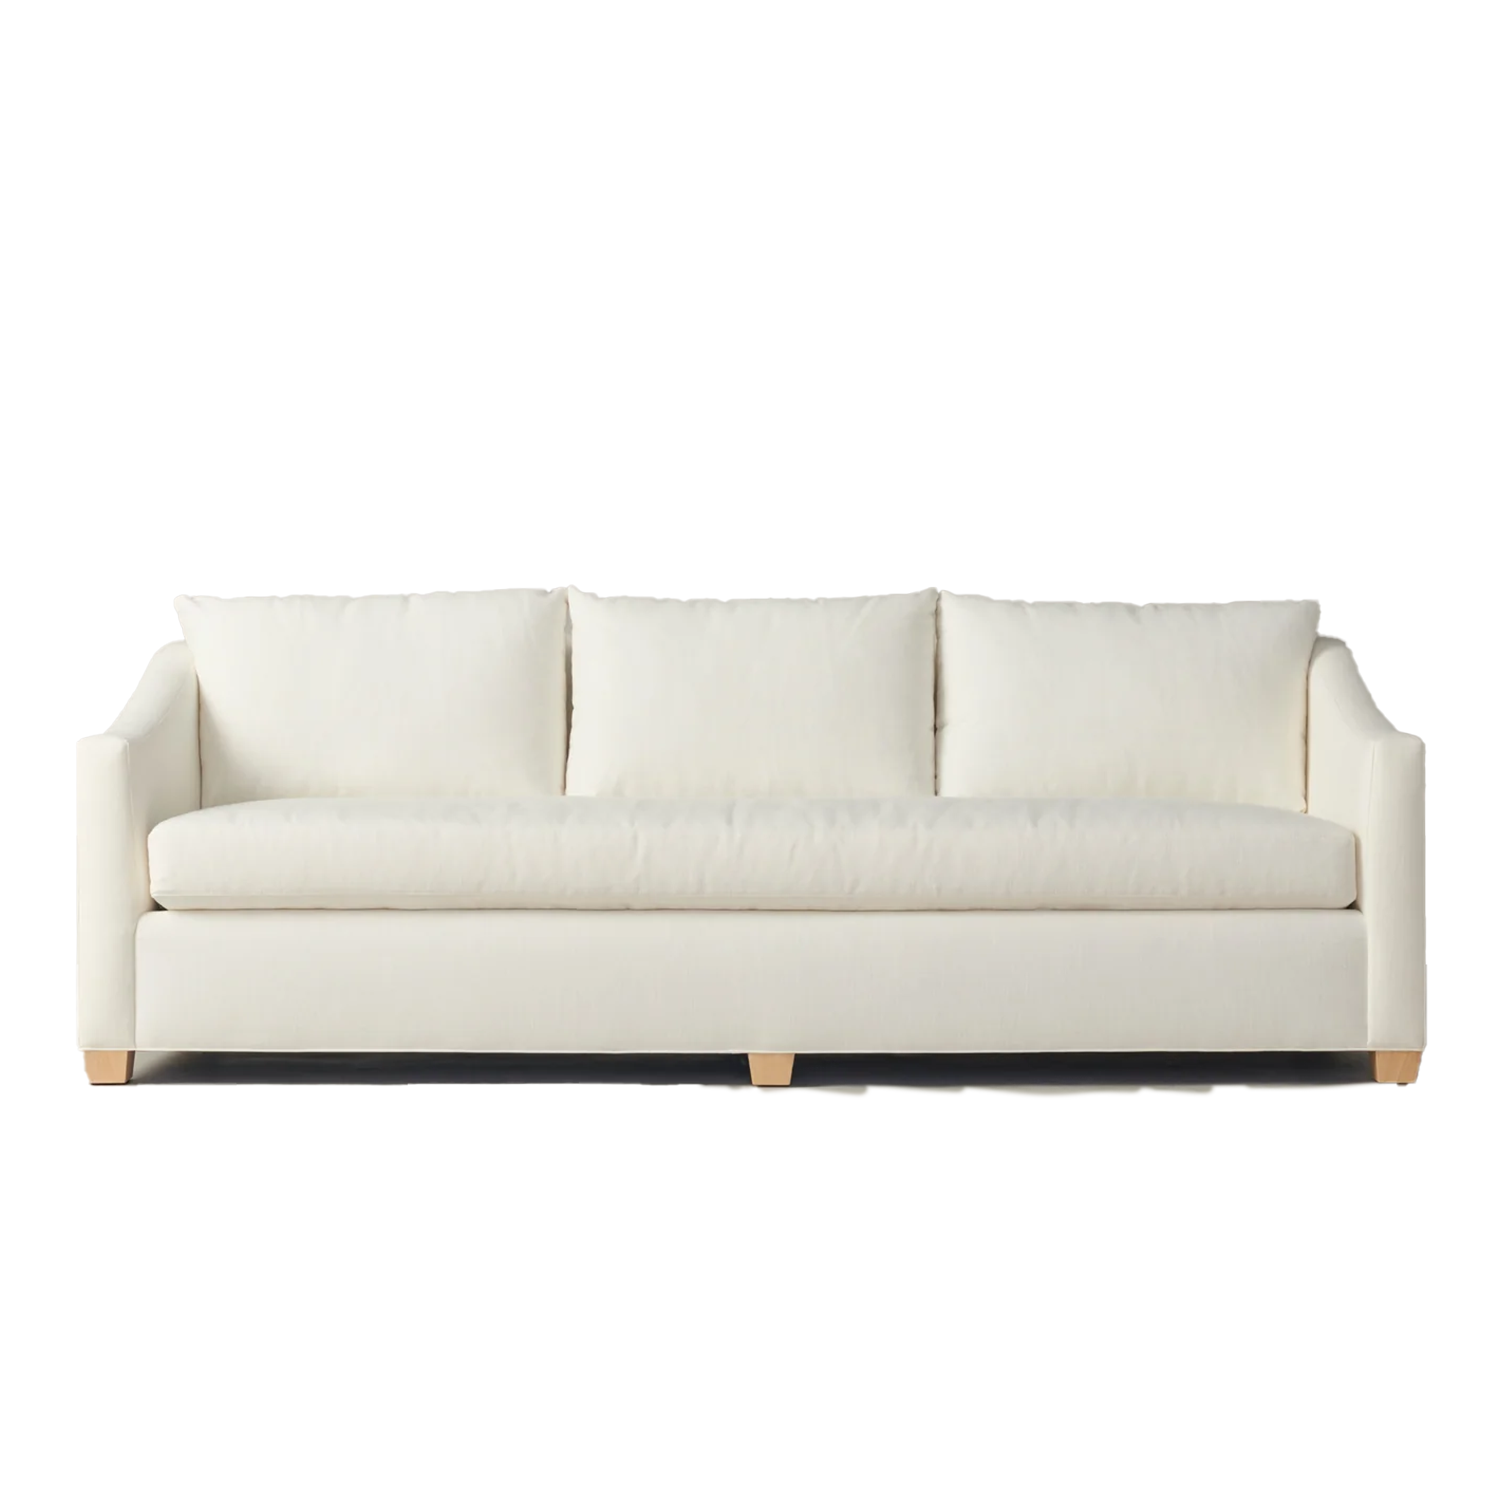 the sullivan sofa